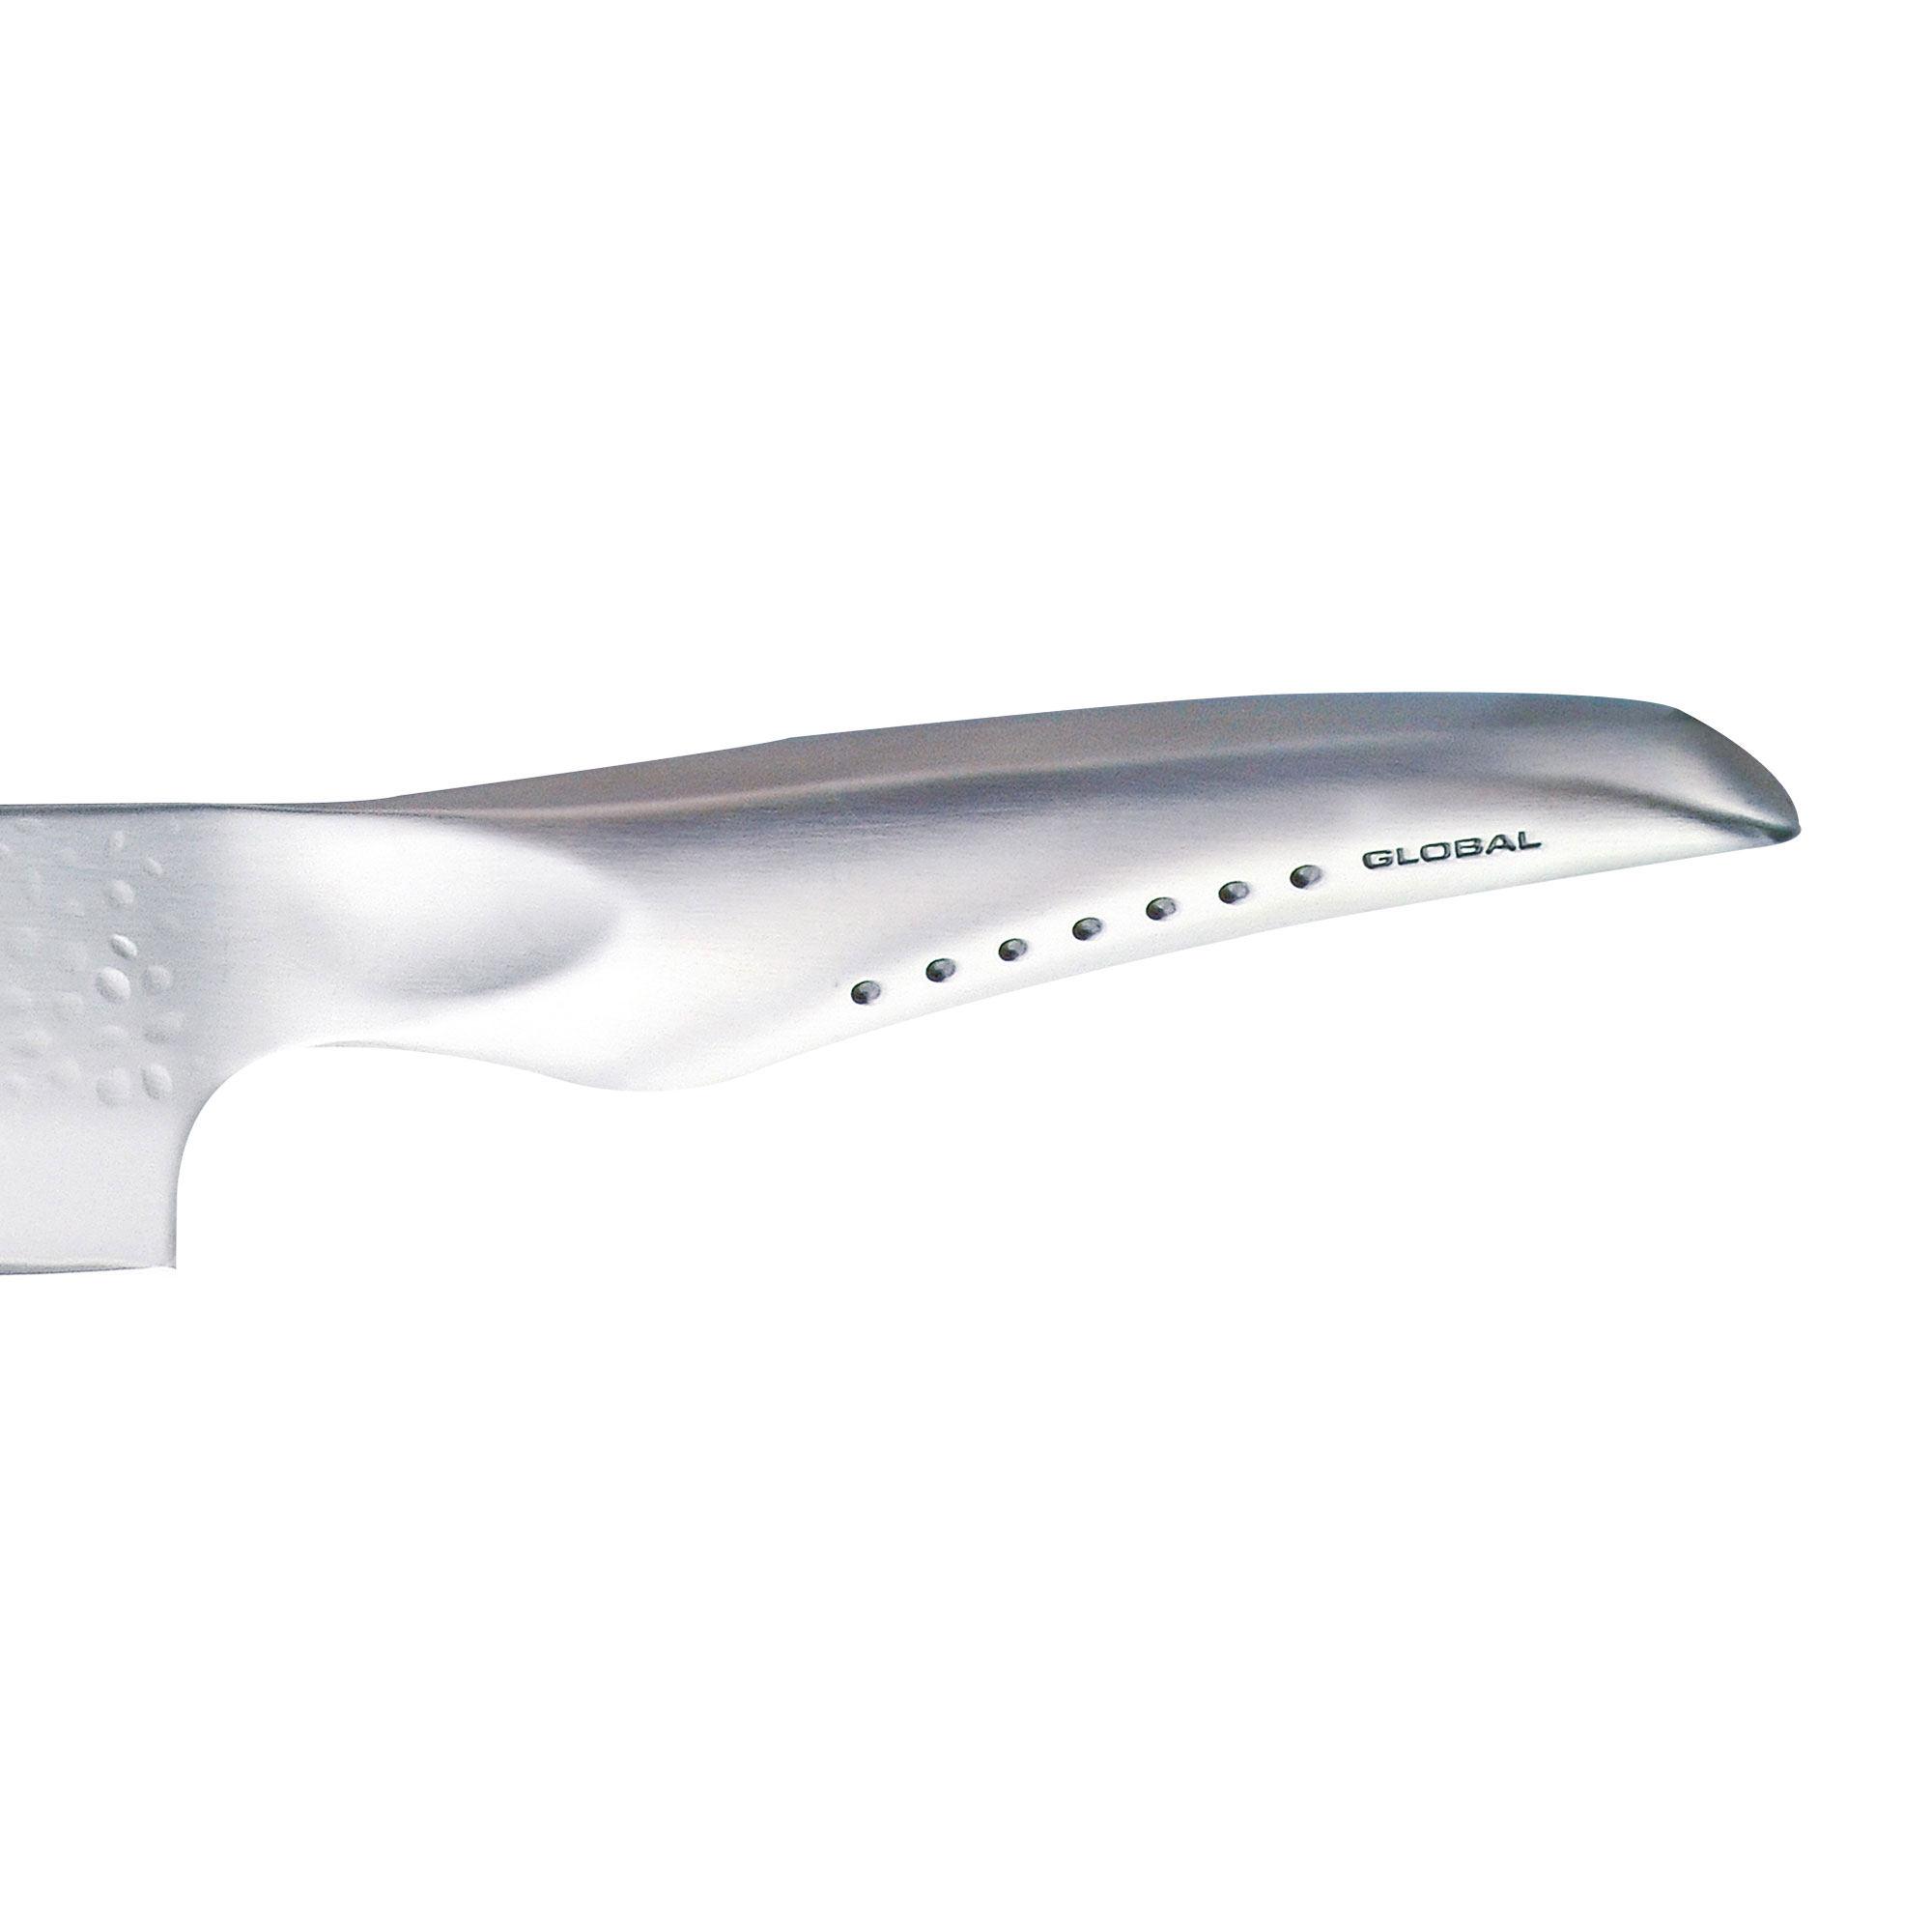 Global Sai Vegetable Knife 15cm Image 3